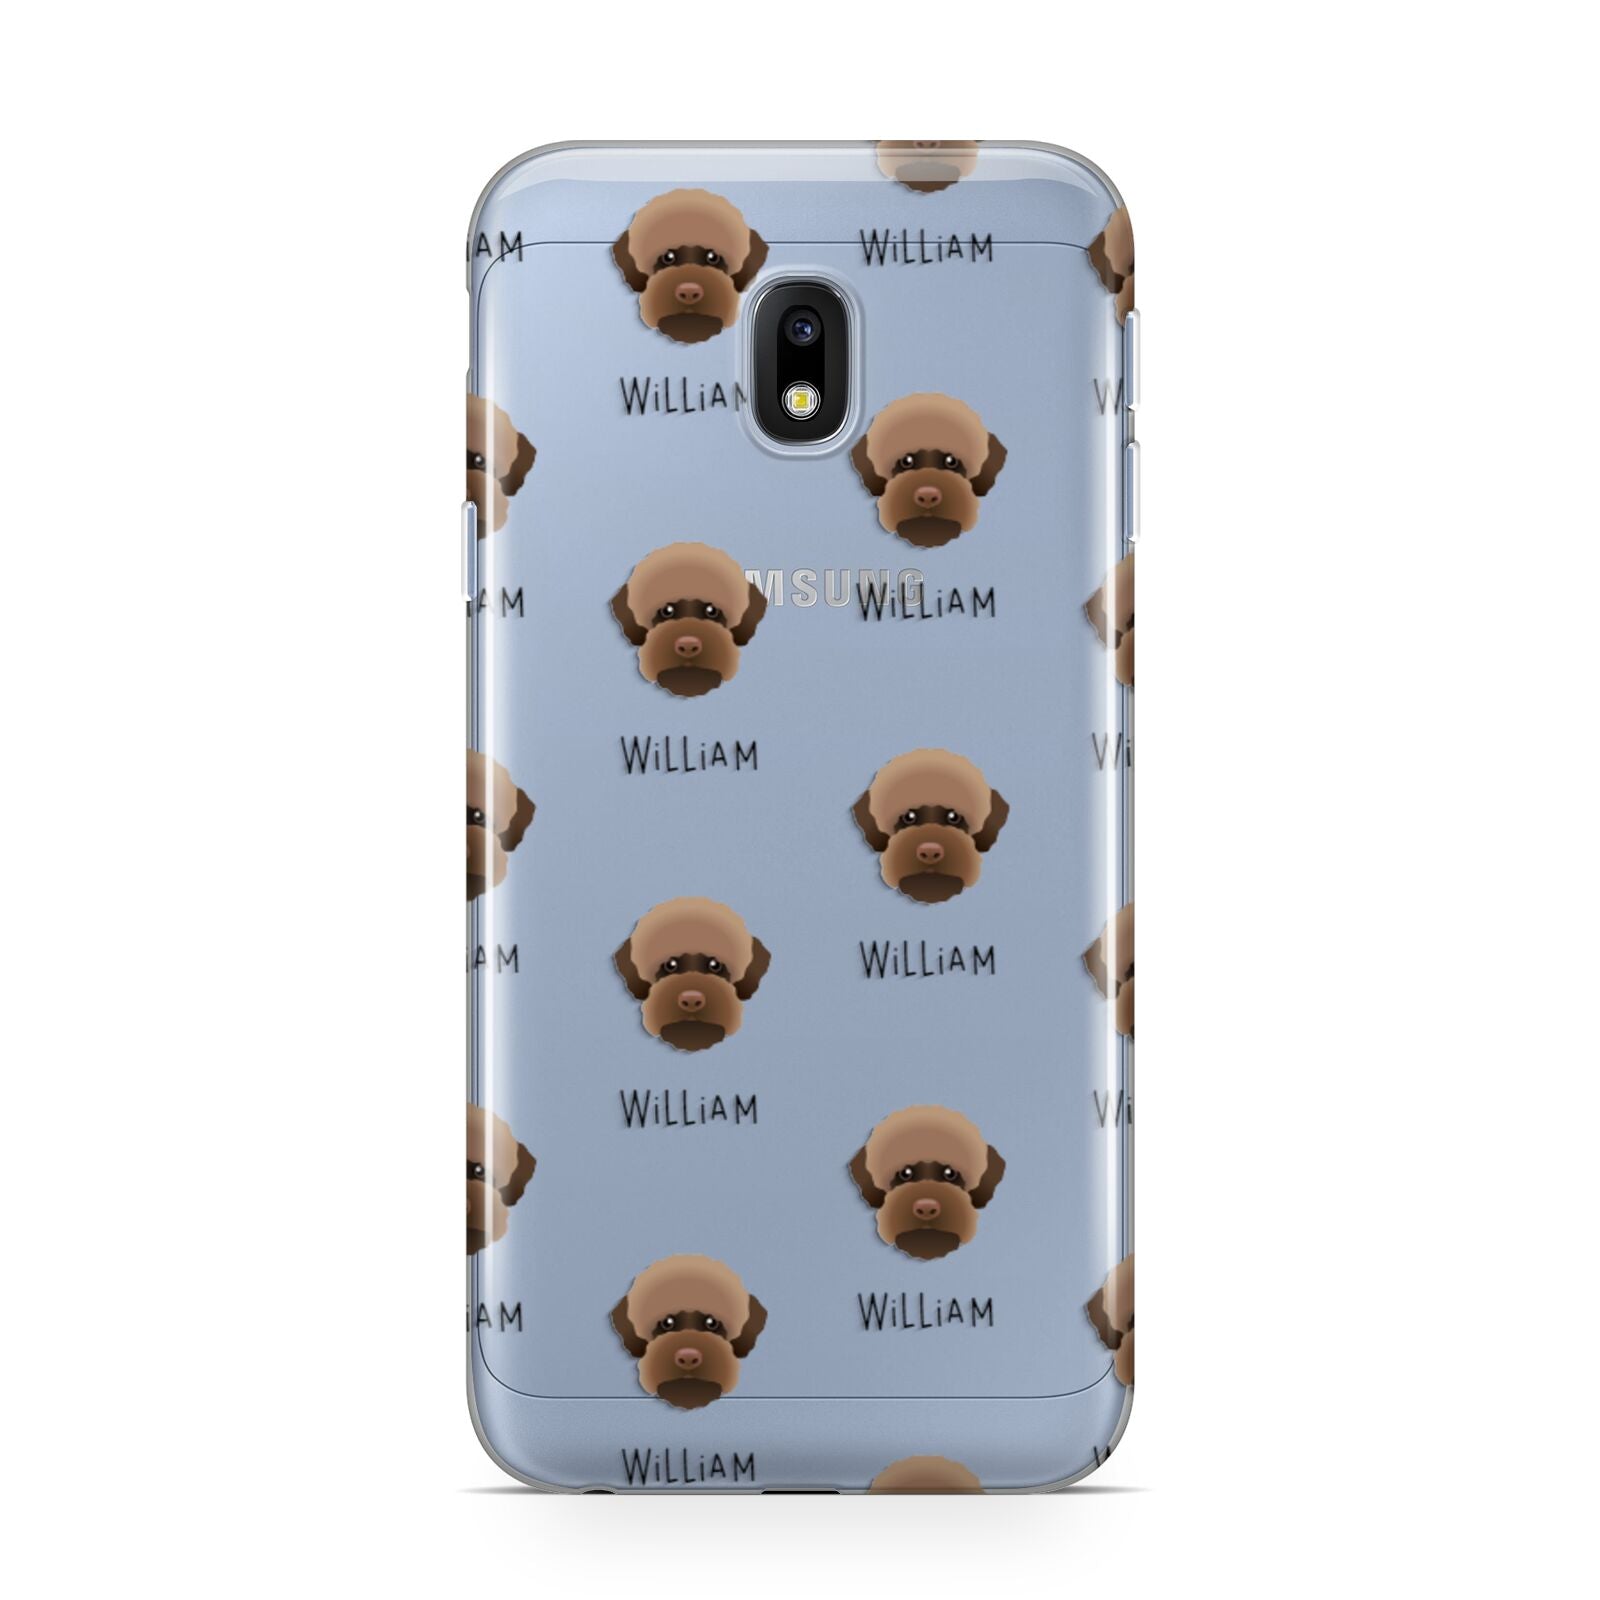 Lagotto Romagnolo Icon with Name Samsung Galaxy J3 2017 Case